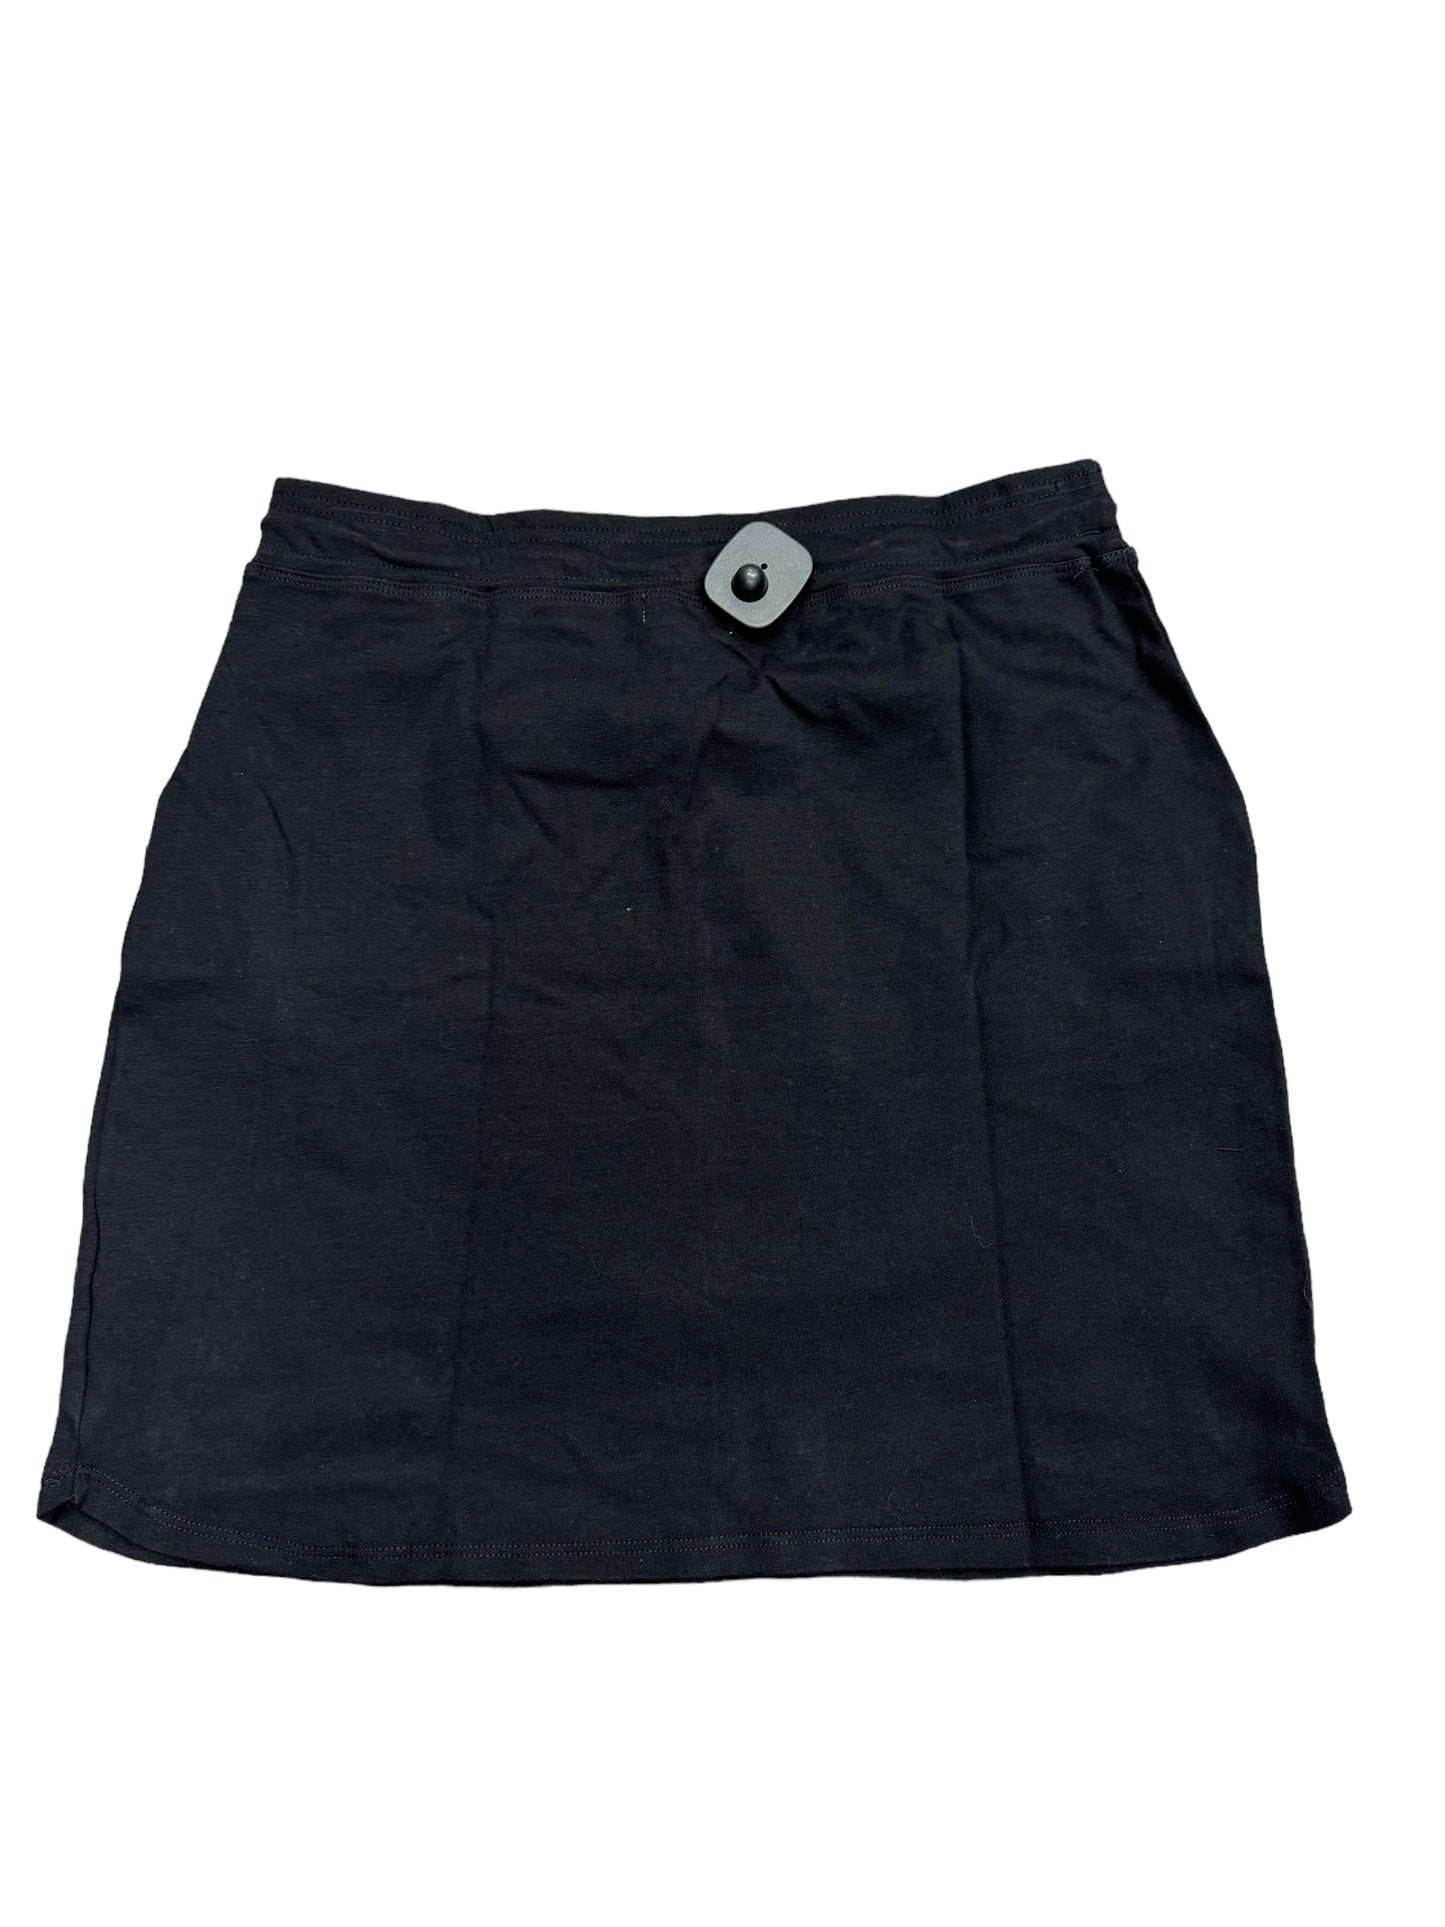 Skirt Mini & Short By Sundry  Size: 10